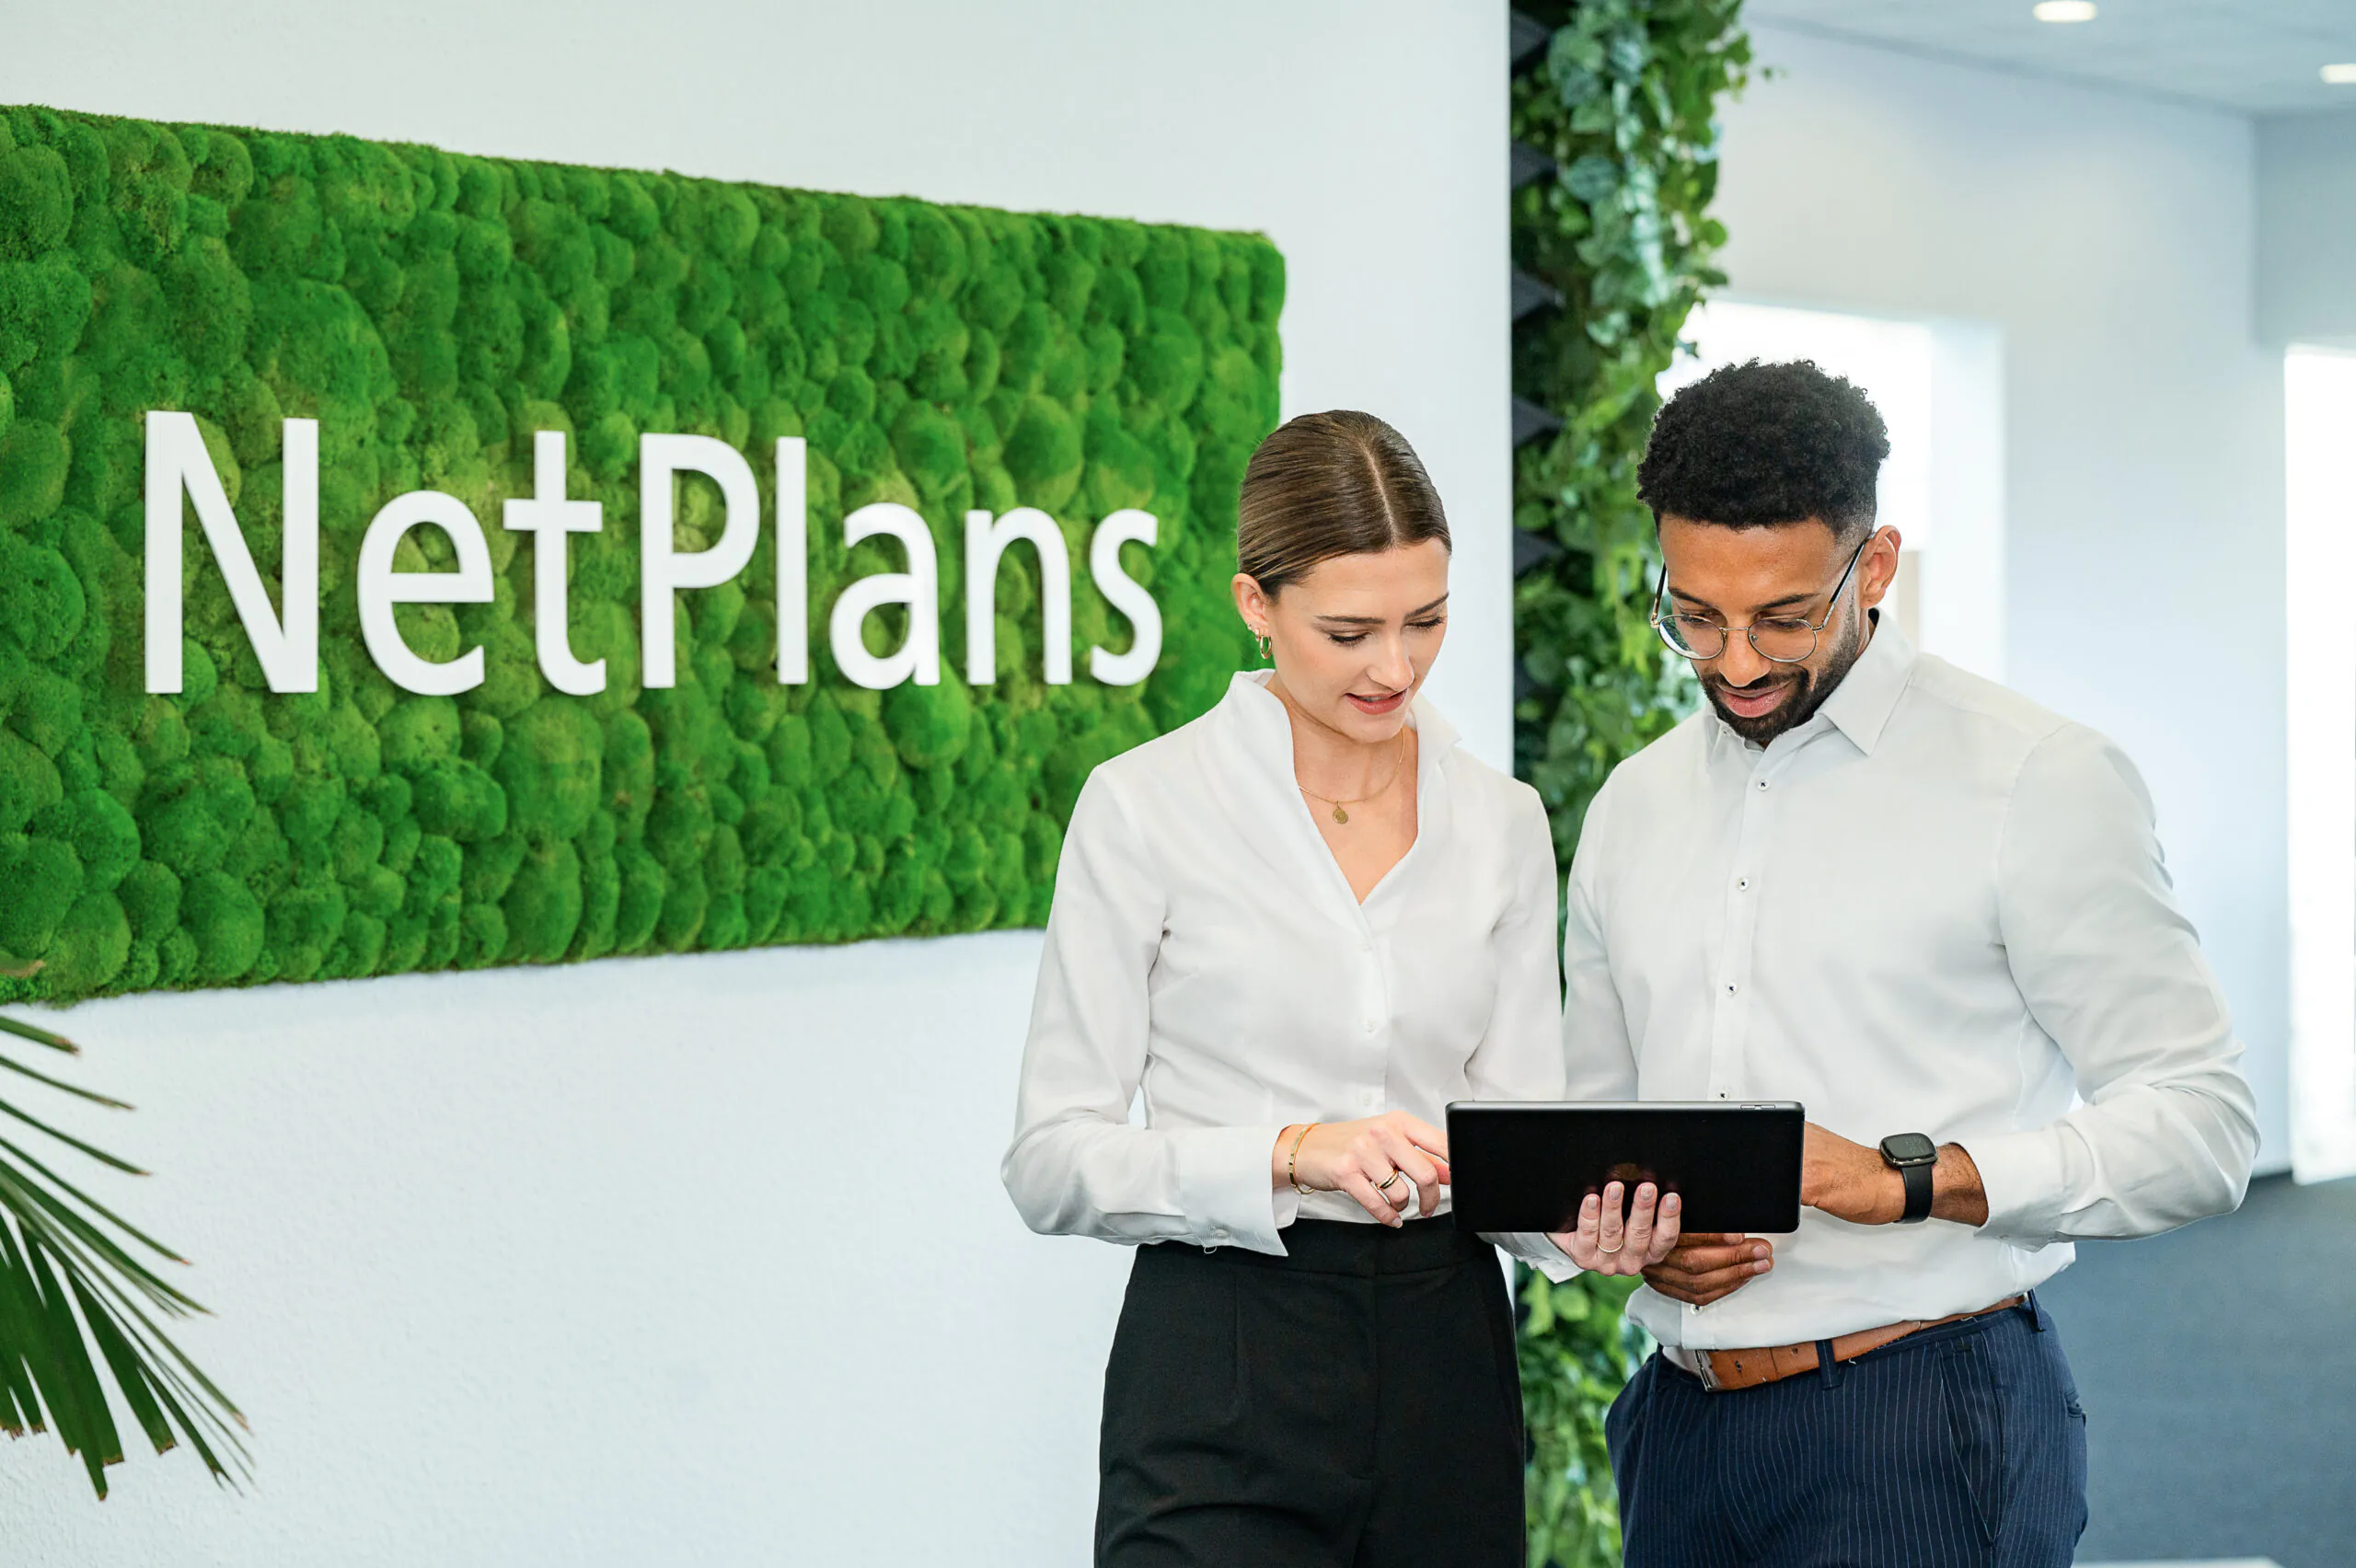 Absprache zweier Geschäftskollegen auf Tablet vor Netplans Schriftzug im Bürogang